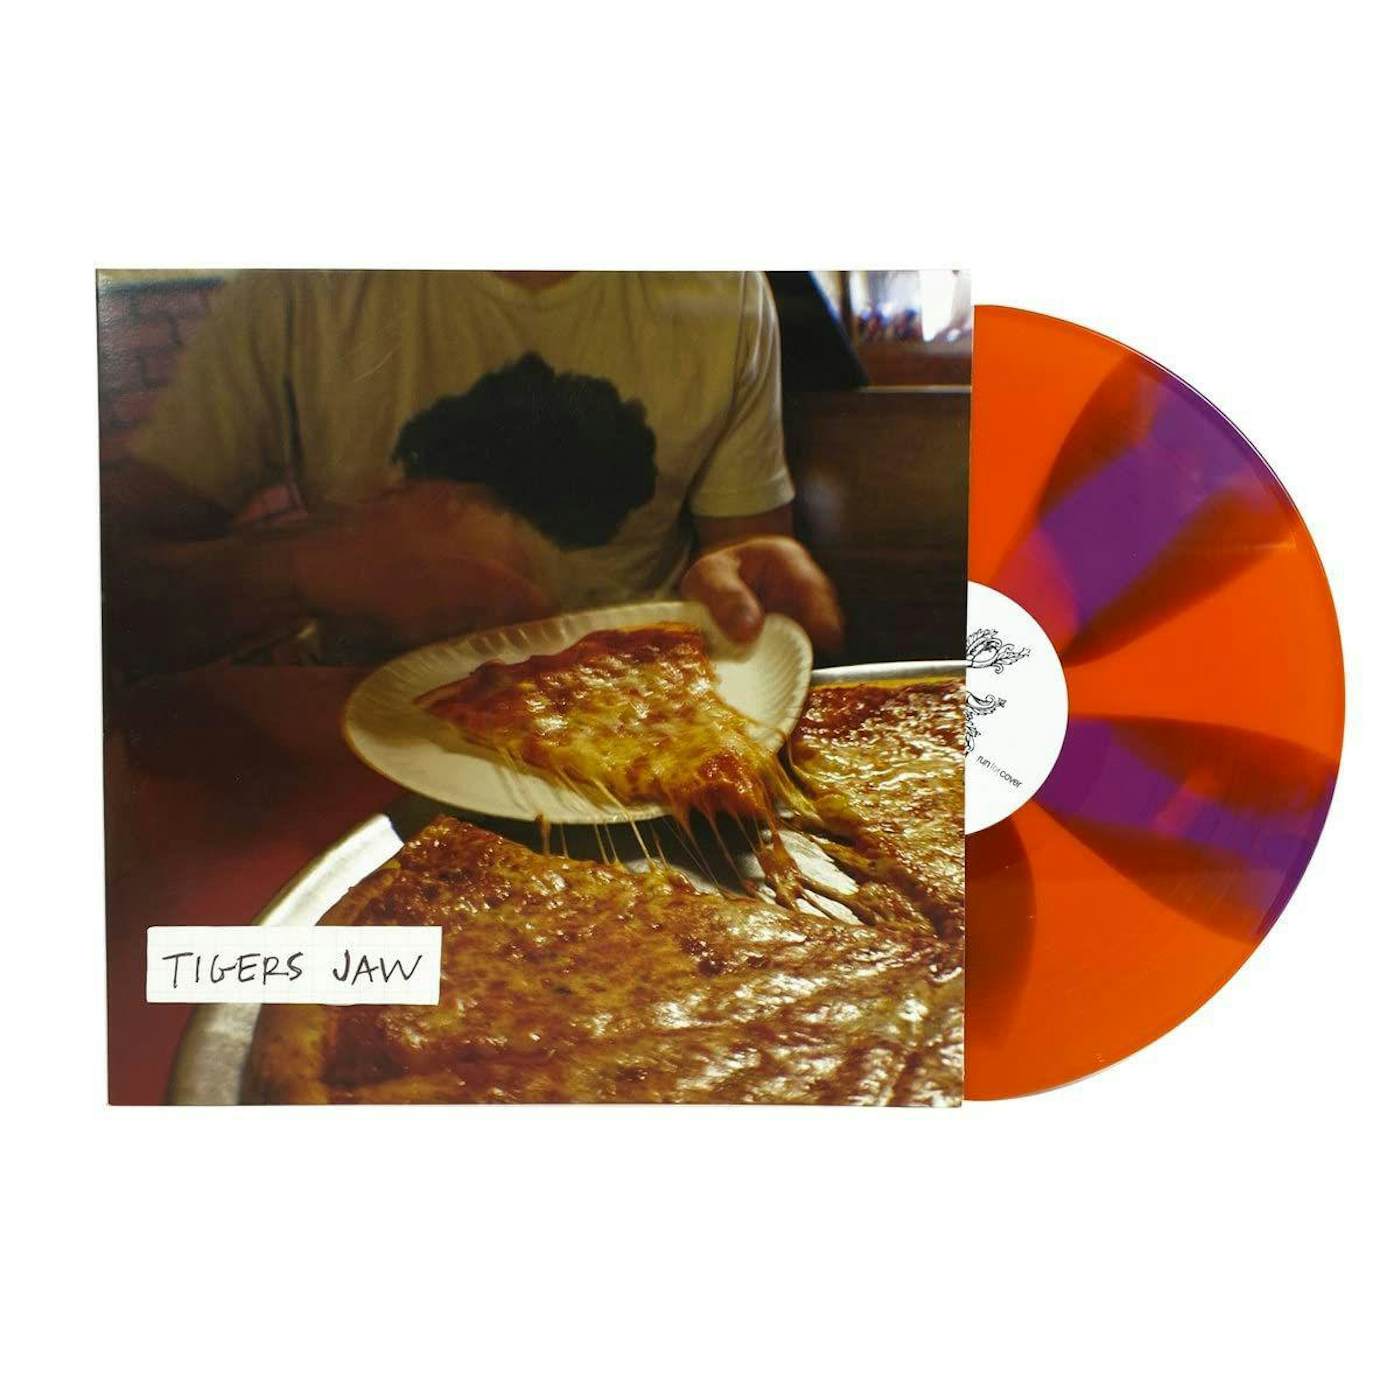  Tigers Jaw (Purple / Orange Pinwheel) Vinyl record